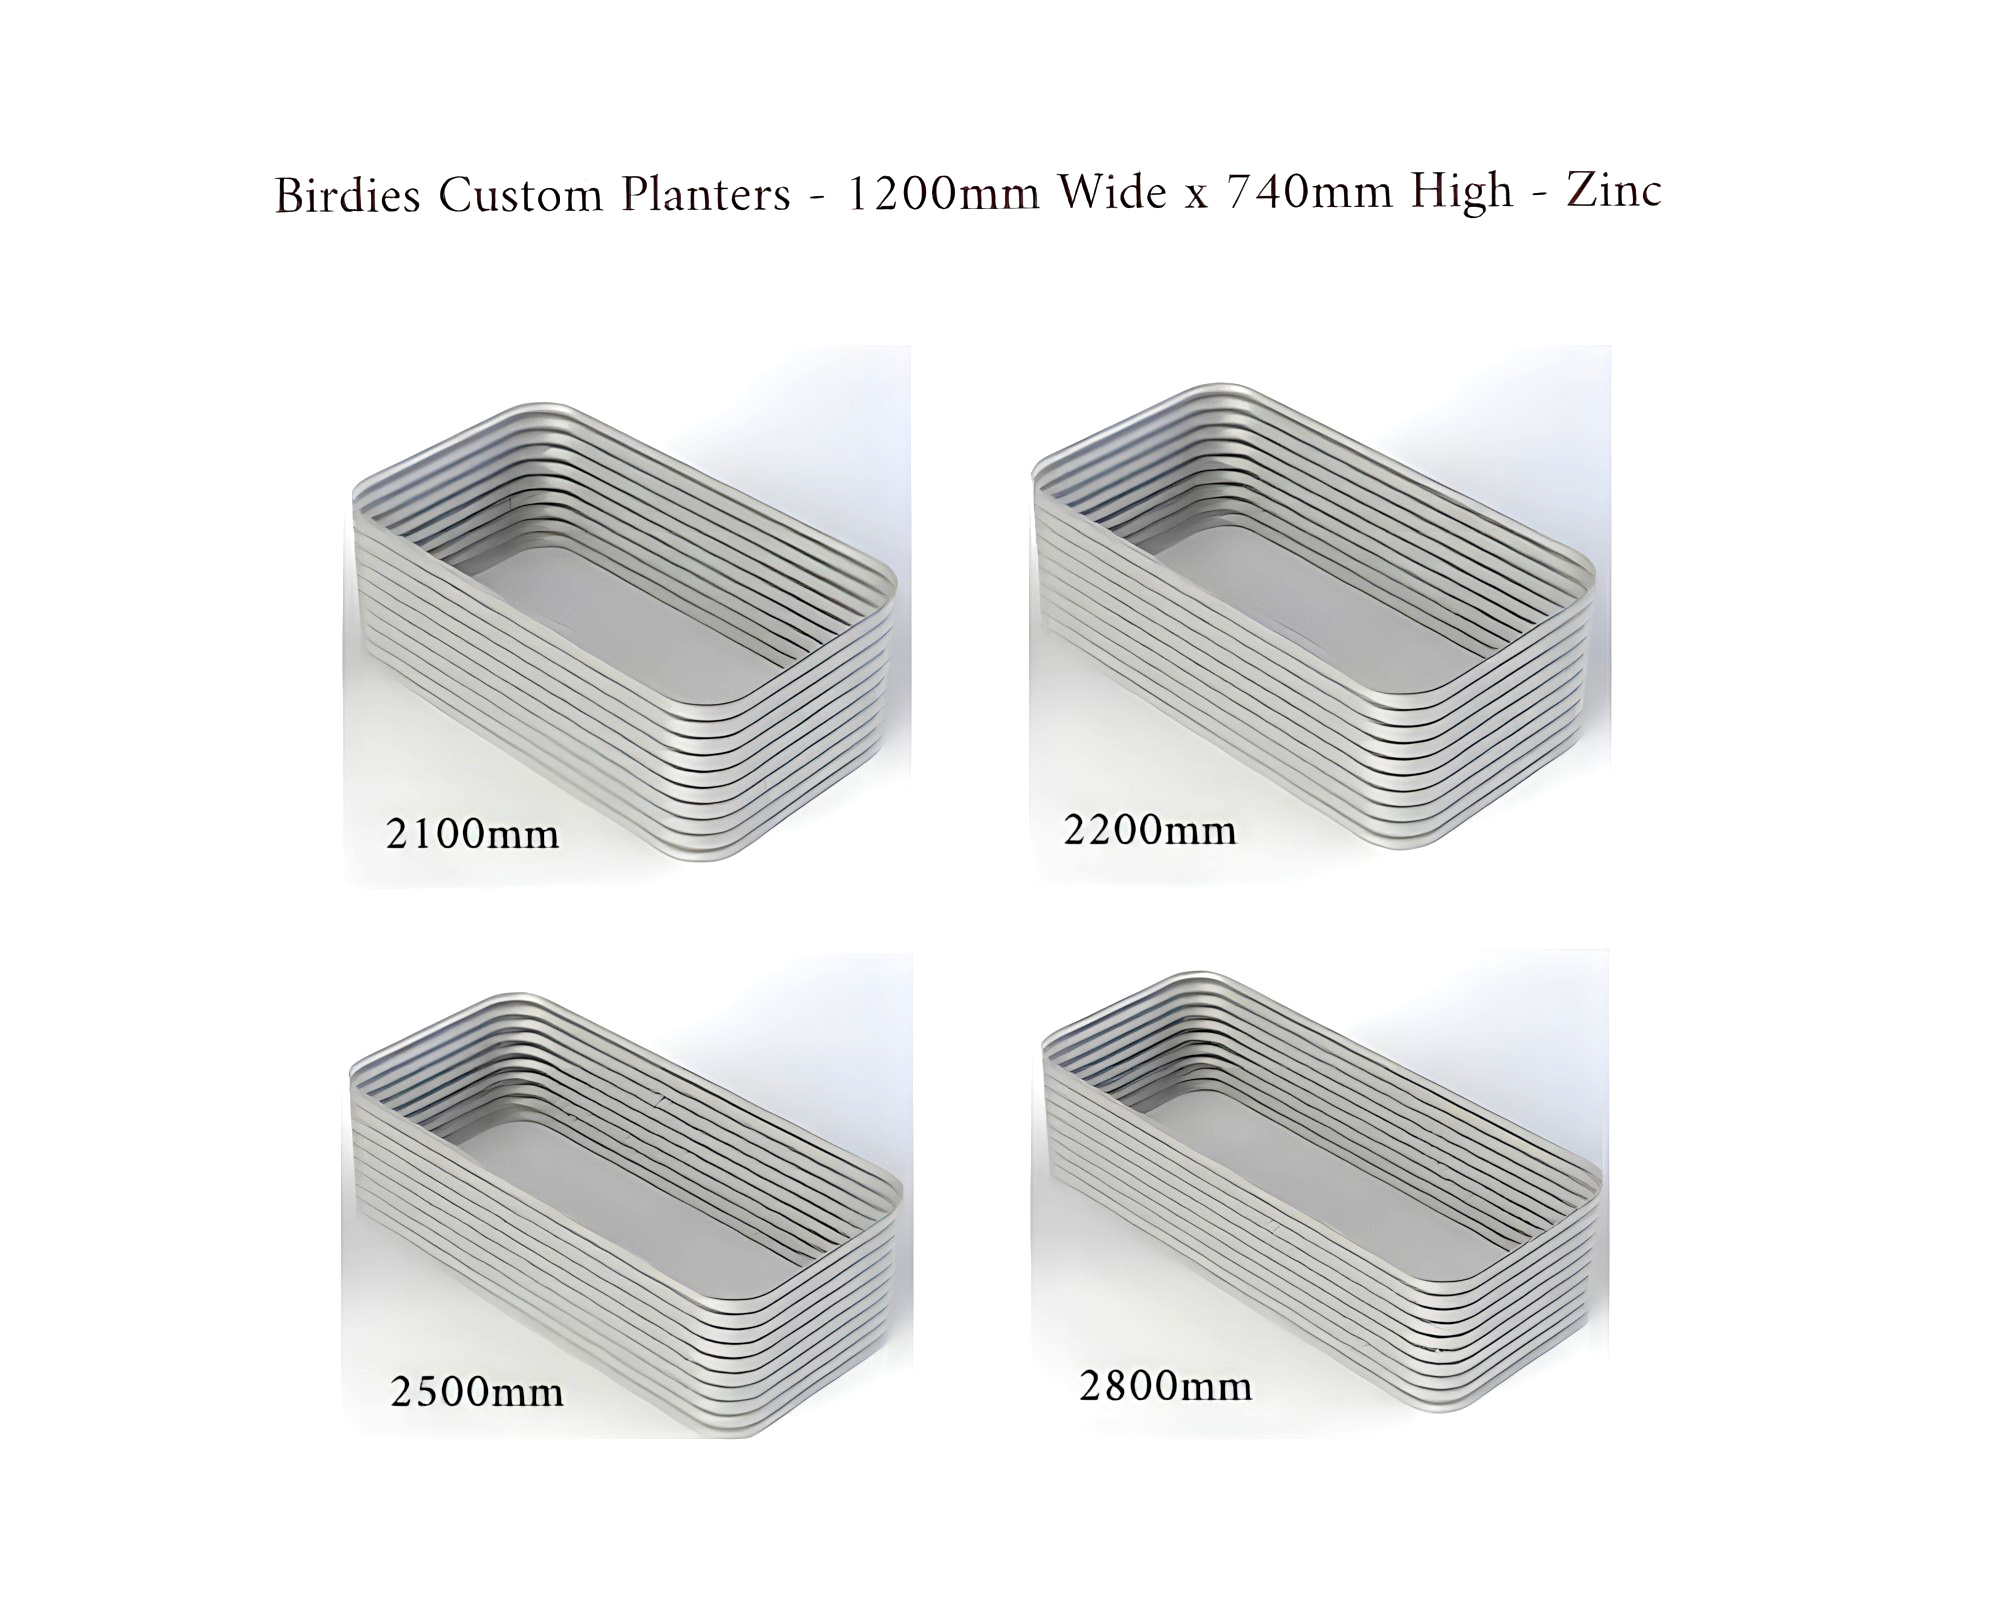 Birdies Custom Planters - 1200mm Wide x 740mm High - Lengths: 2100mm, 2200mm, 2500mm, 2800mm - Zinc